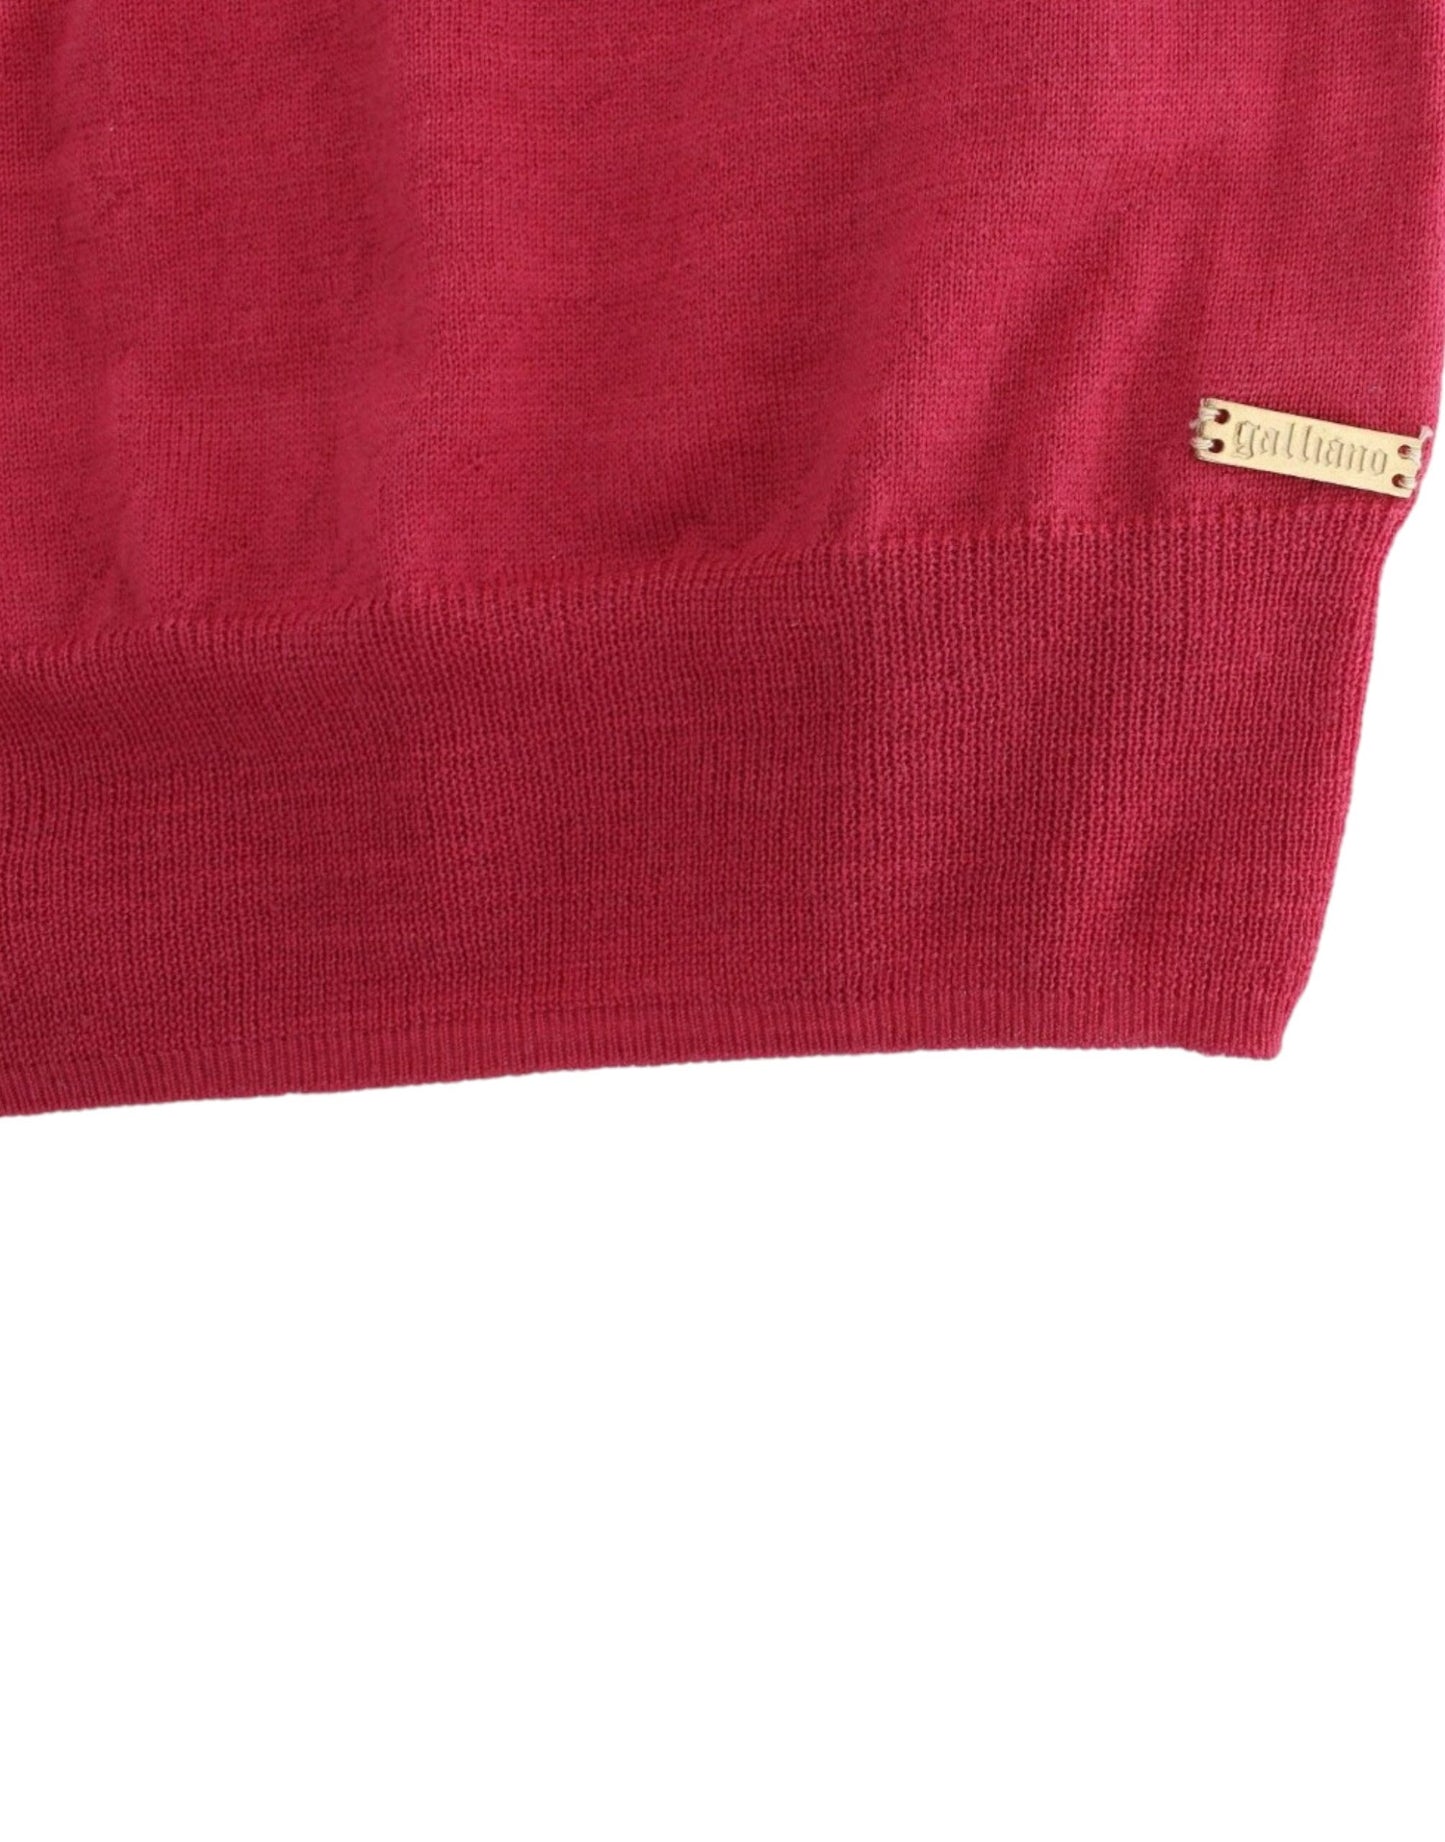 John Galliano Pink wool knit top